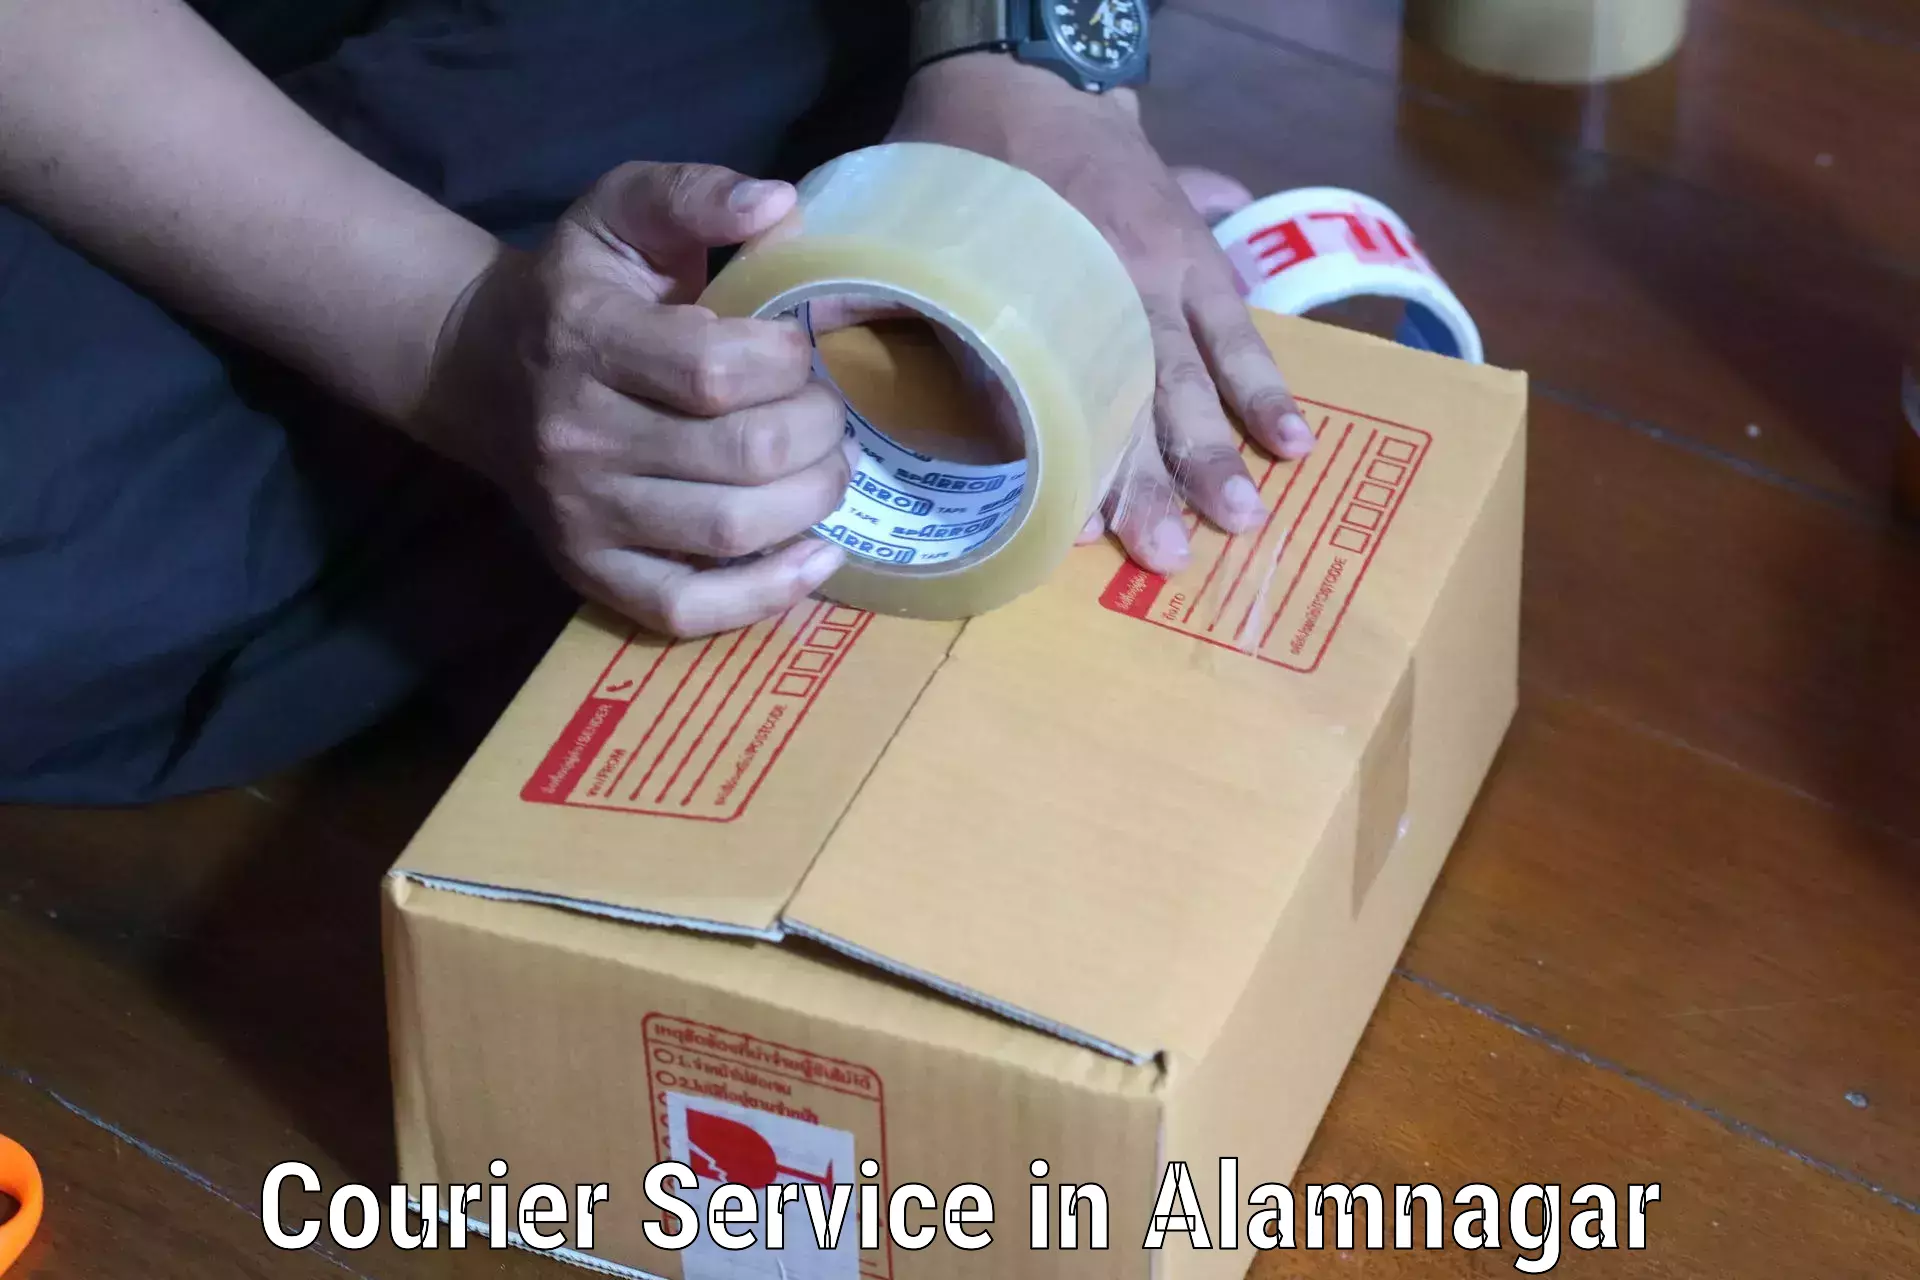 Professional parcel services in Alamnagar